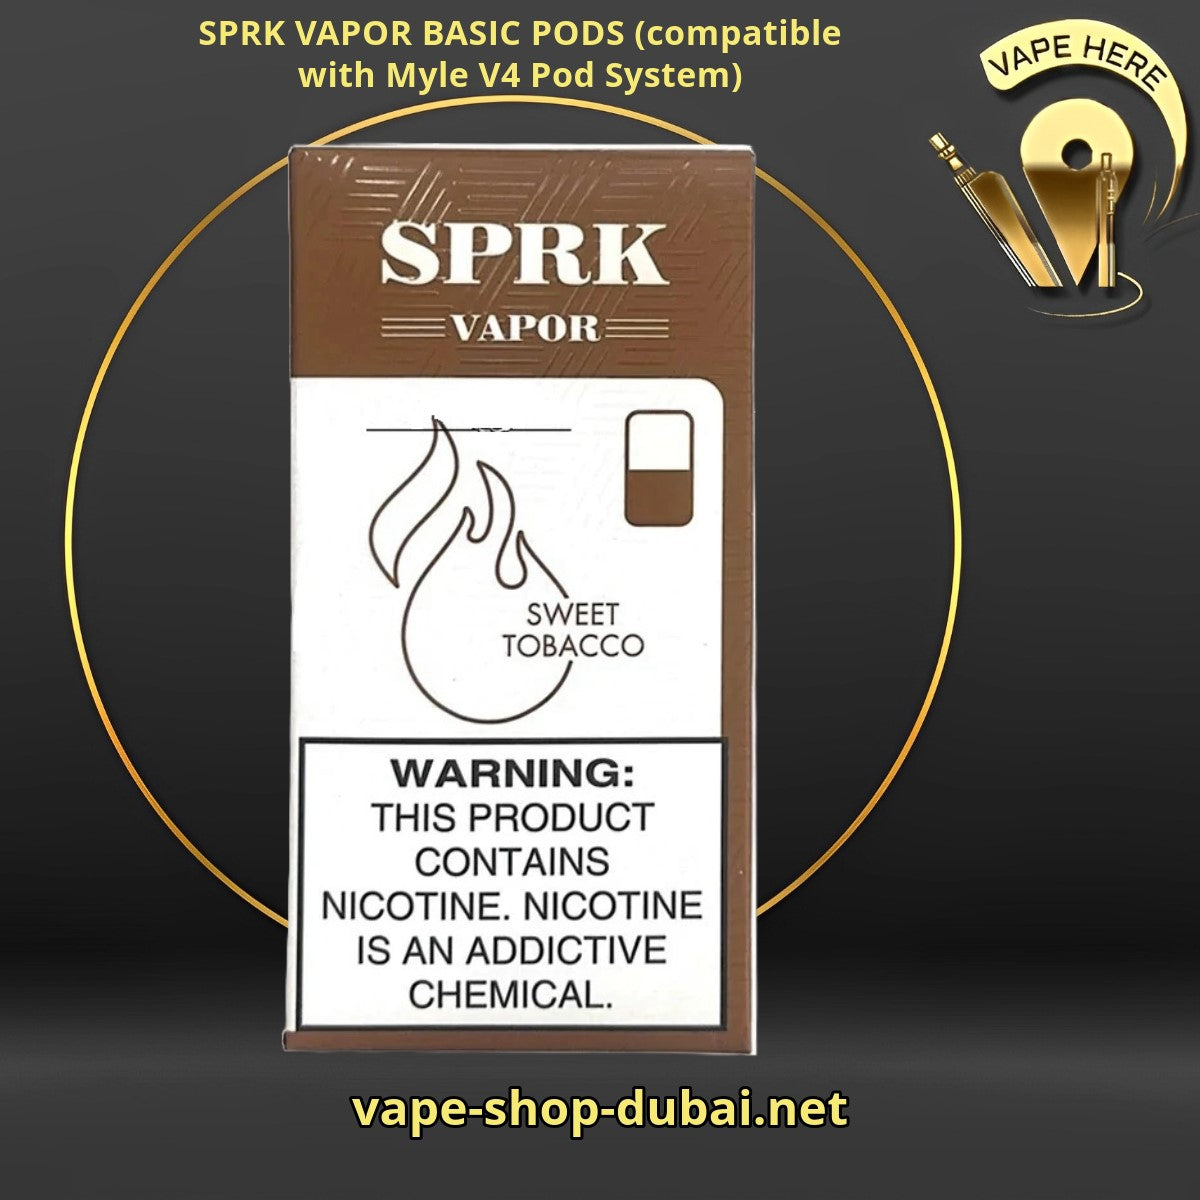 SPRK VAPOR BASIC PODS Sweet Tobacco (compatible with Myle V4 Pod System) UAE Dubai